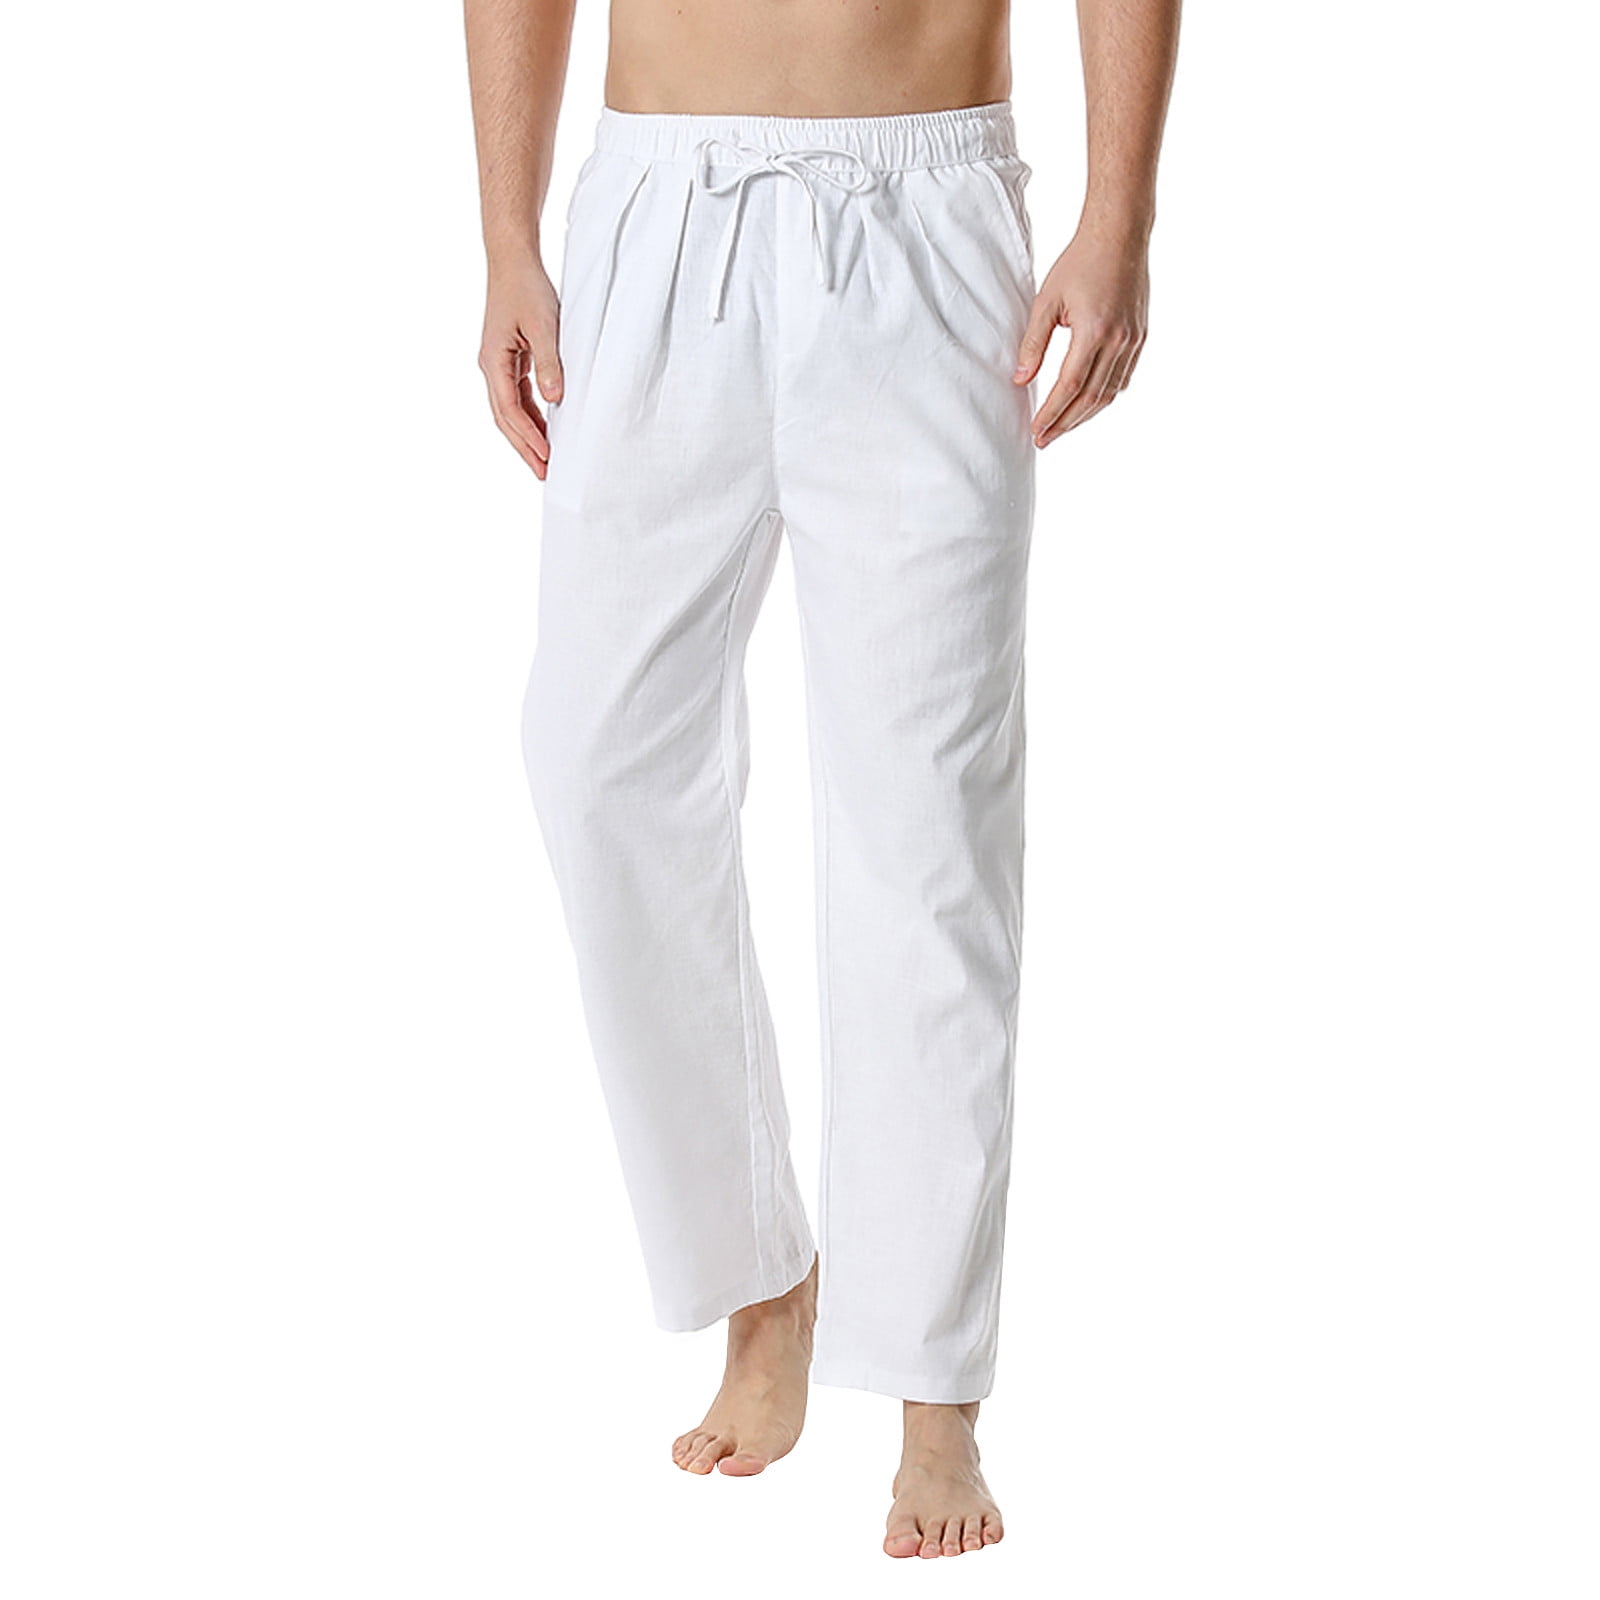 Pants Lightweight Men's Elastic Casual Home Pants Waist Loose Cotton ...